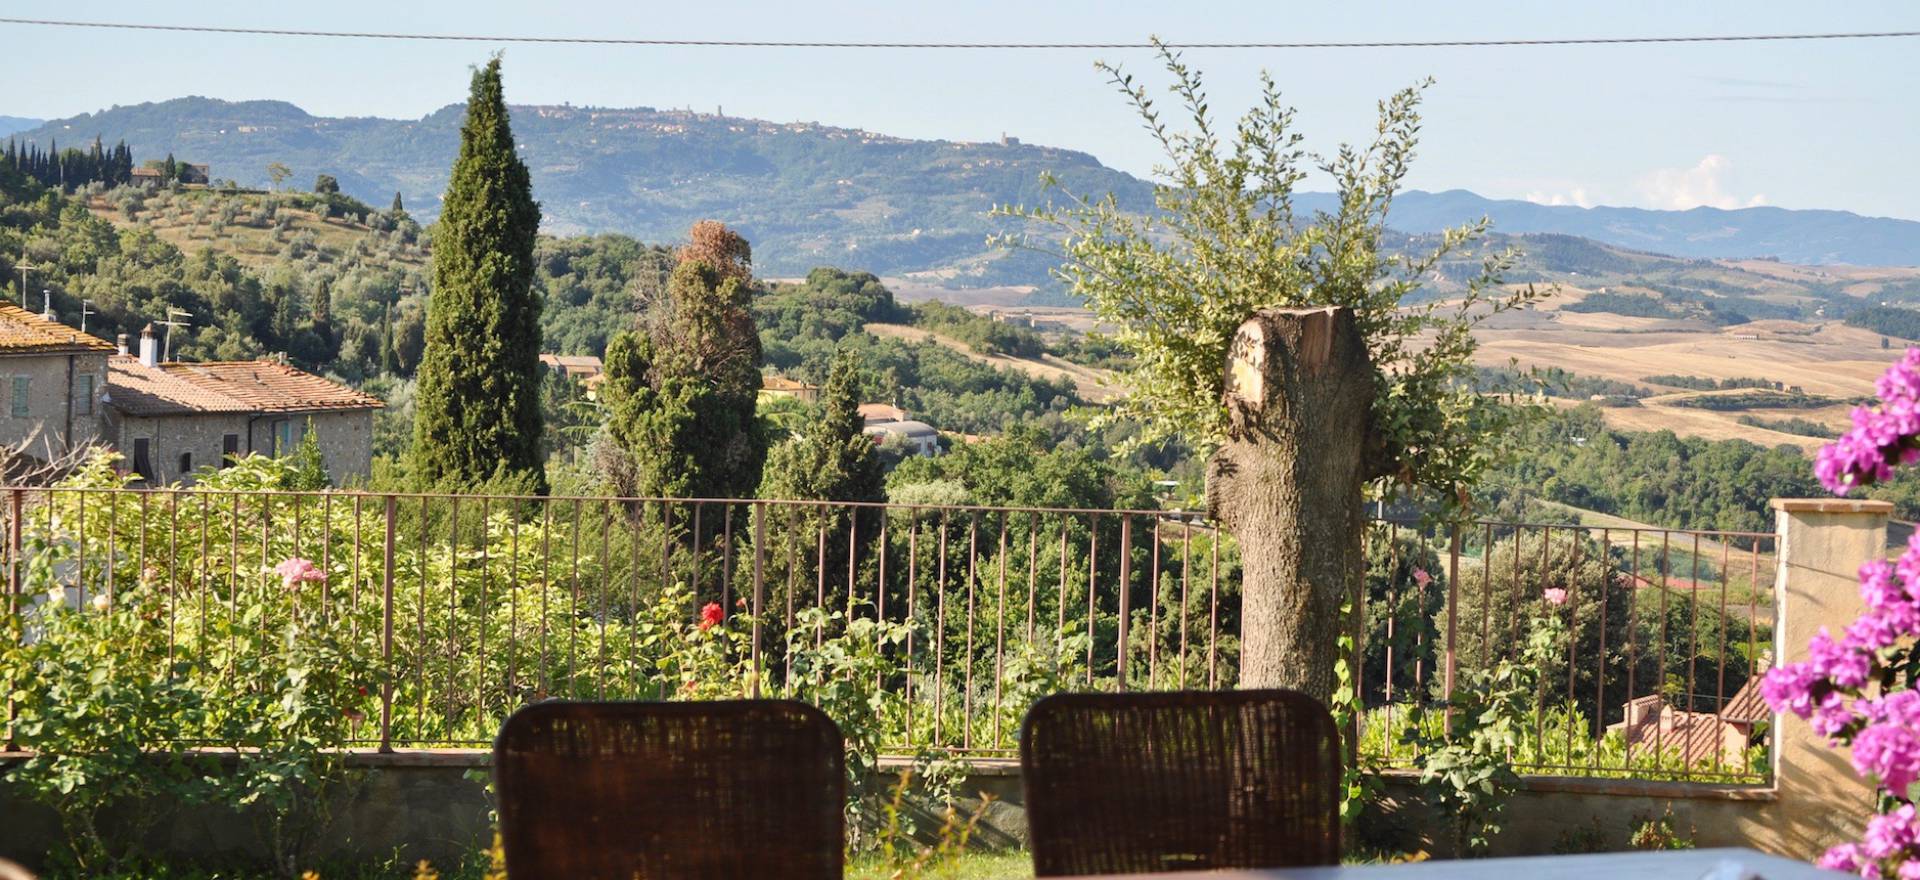 Agriturismo Tuscany Small luxury agriturismo near Volterra in Tuscany